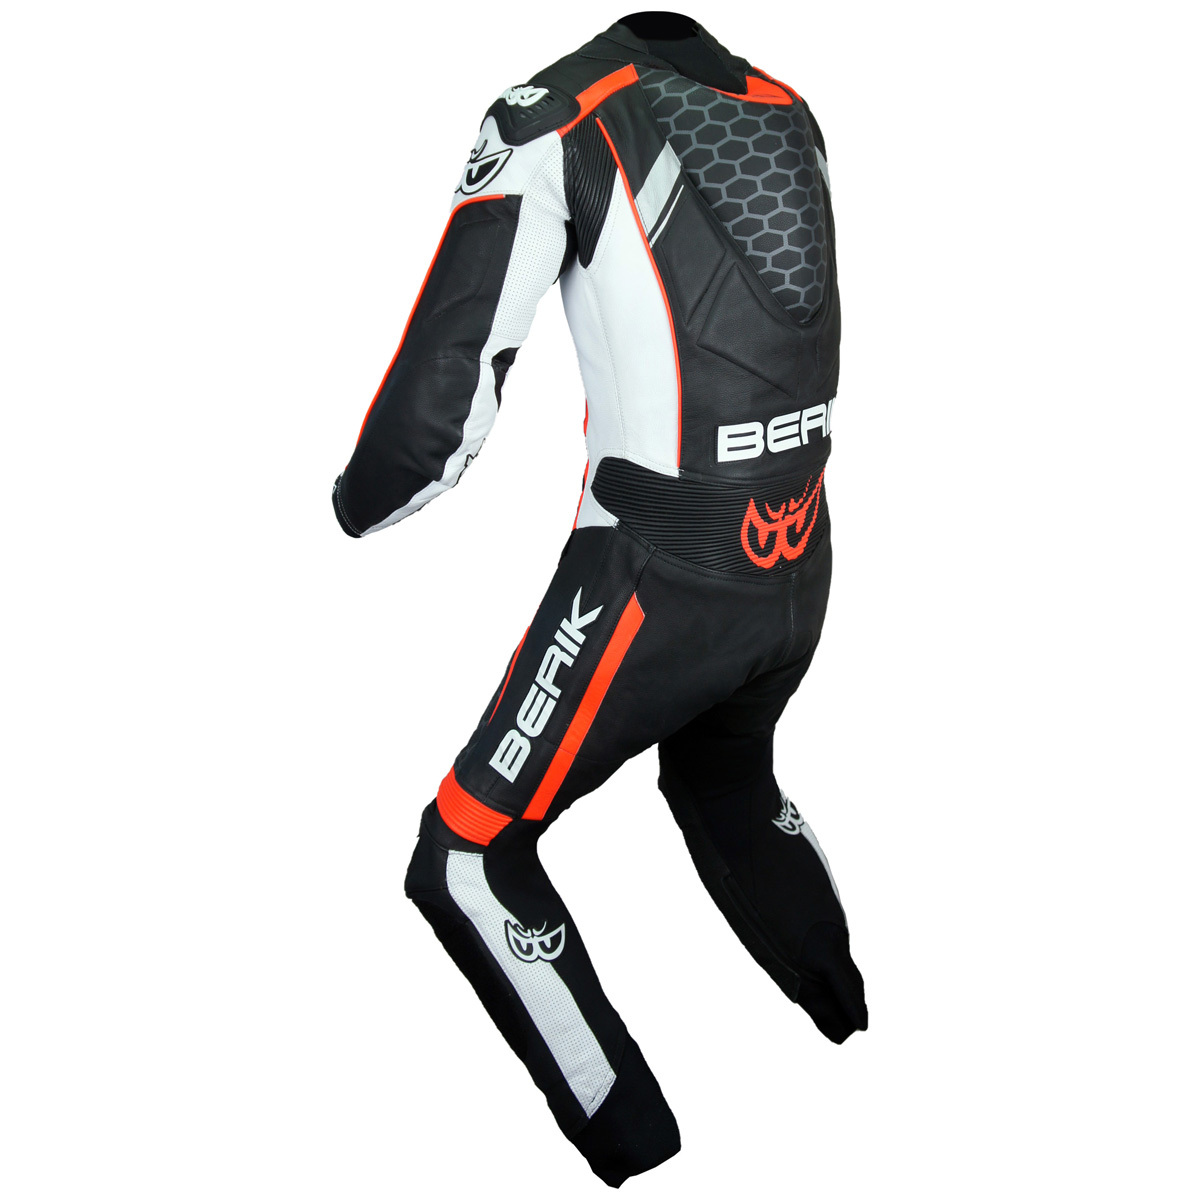 BERIK Berik high grade racing suit LS1-201329-BK RED 56 size 3XL size corresponding [ motorcycle supplies ] MFJ official recognition model 